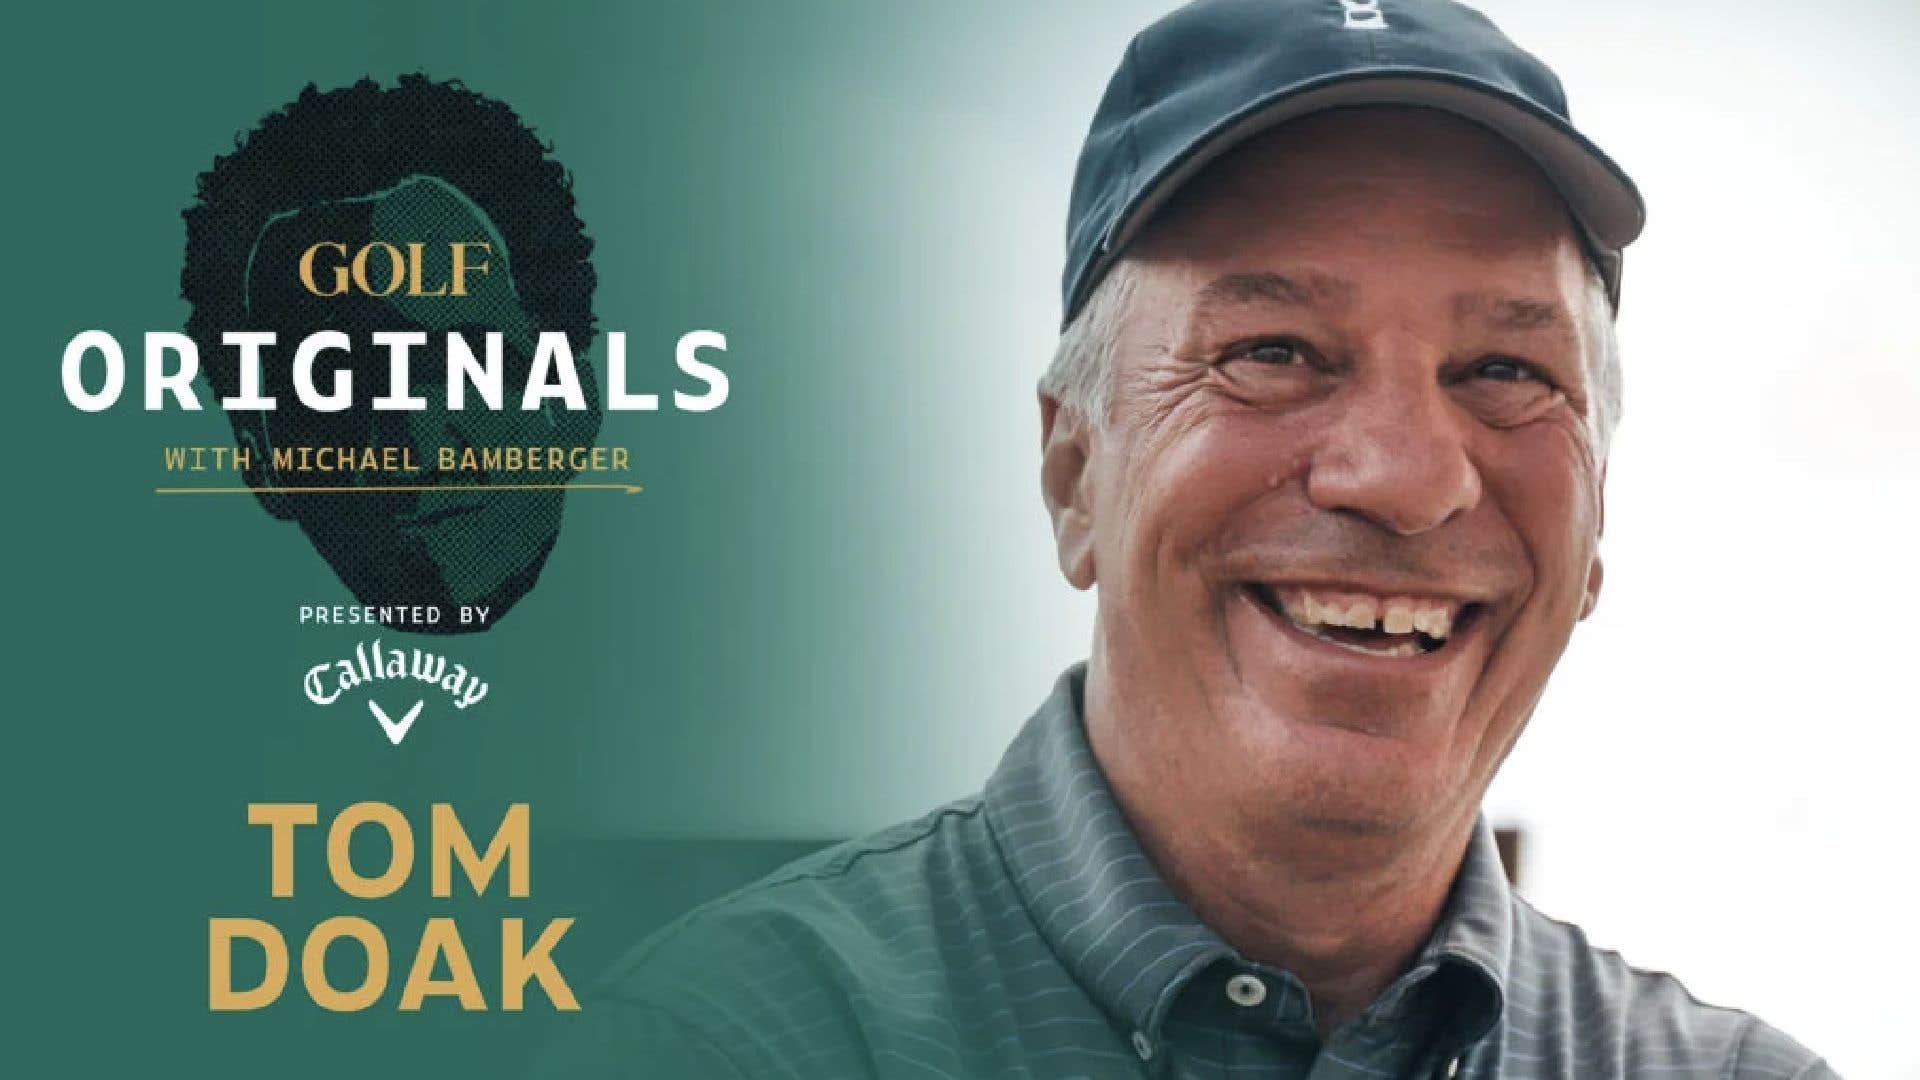 Tom Doak isn’t your typical golf-course designer. Ask Tom Doak | GOLF Originals